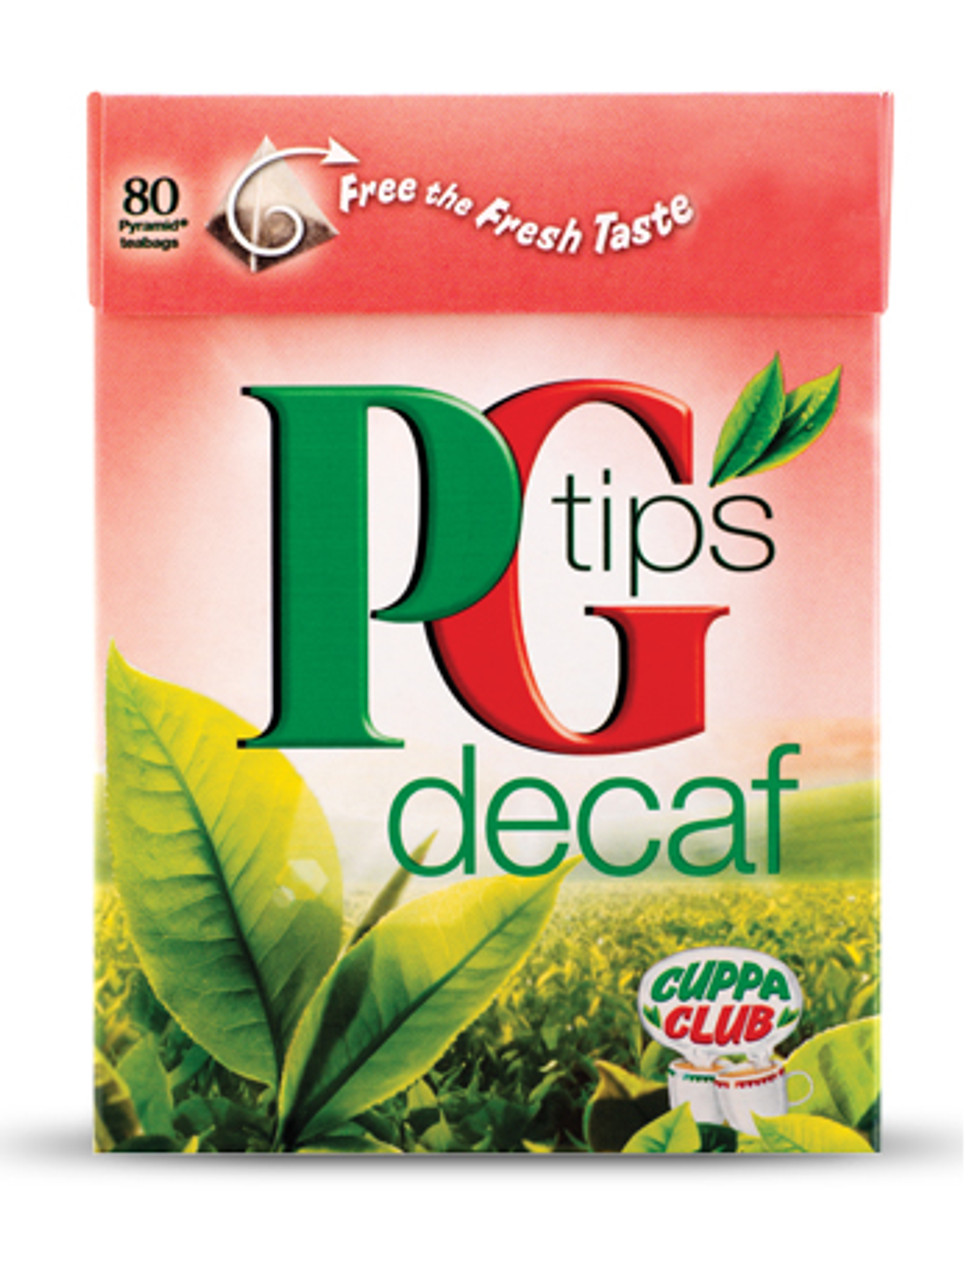 PG Tips* Decaf Tea - 70 pyramid* bags - Blue Monkey Tea Store